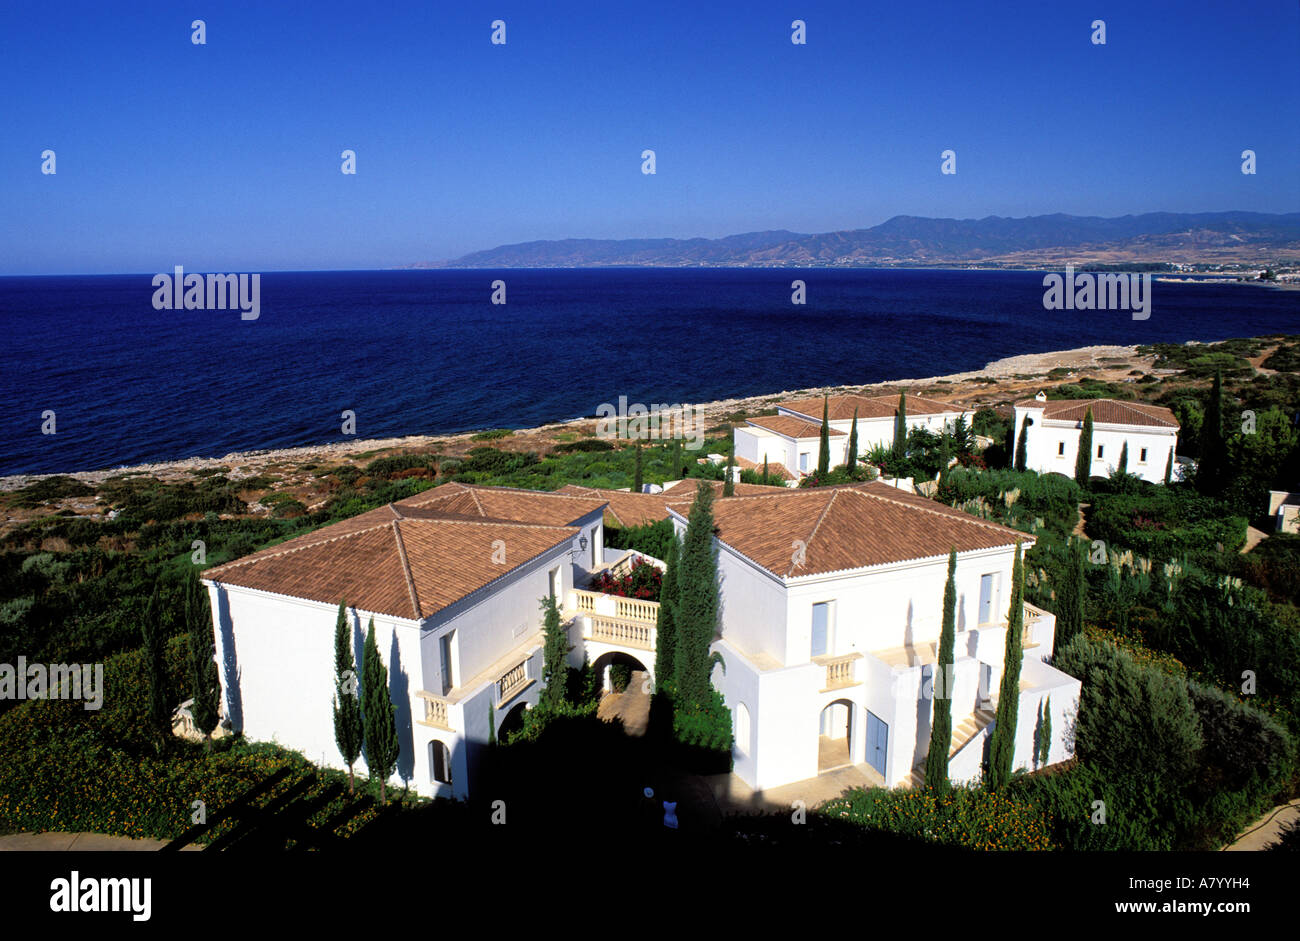 Cyprus, Pafos District, Akamas Peninsula, Lakki town, Anassa Hotel, jet set home, villas in a garden on the seaside Stock Photo